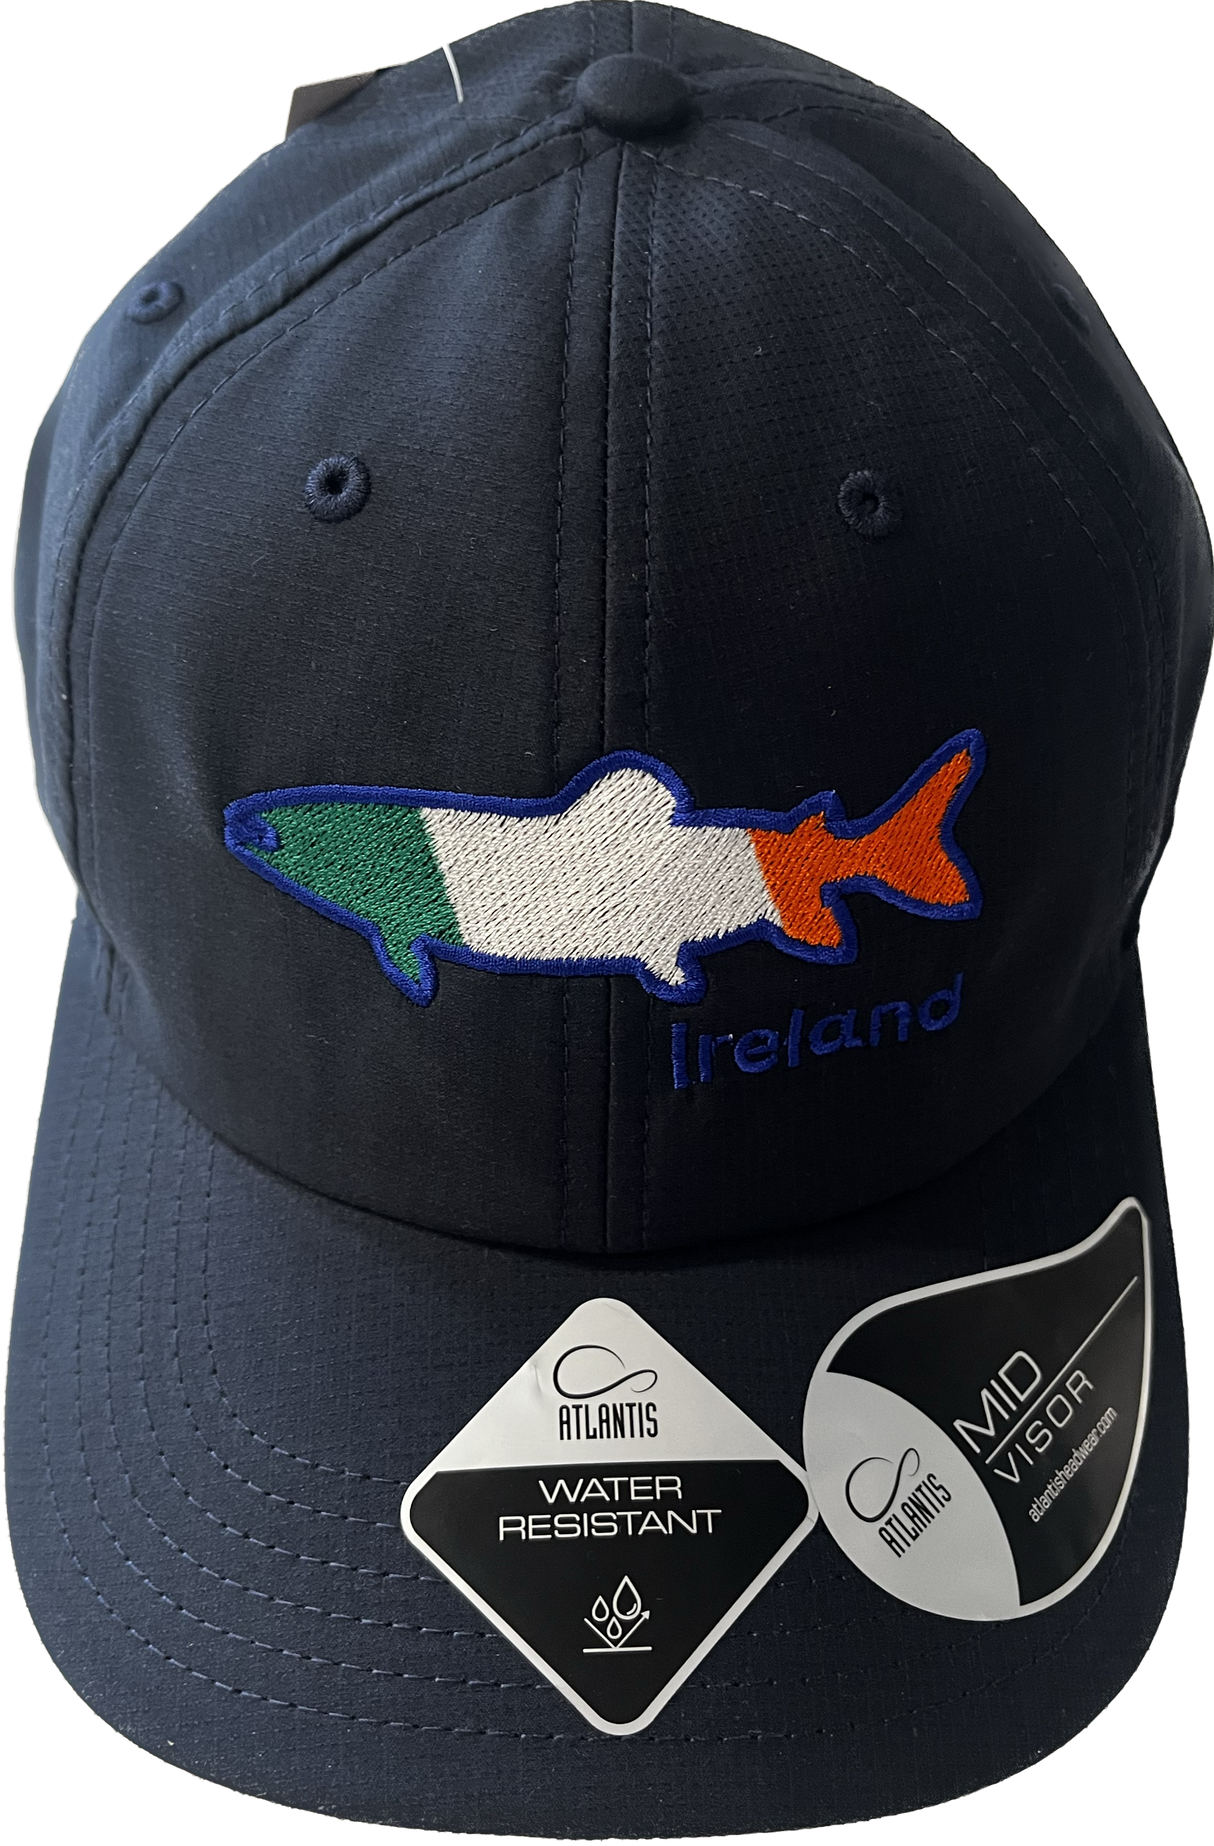 Clonanav Water Resistant Cap - Irish Trout Navy